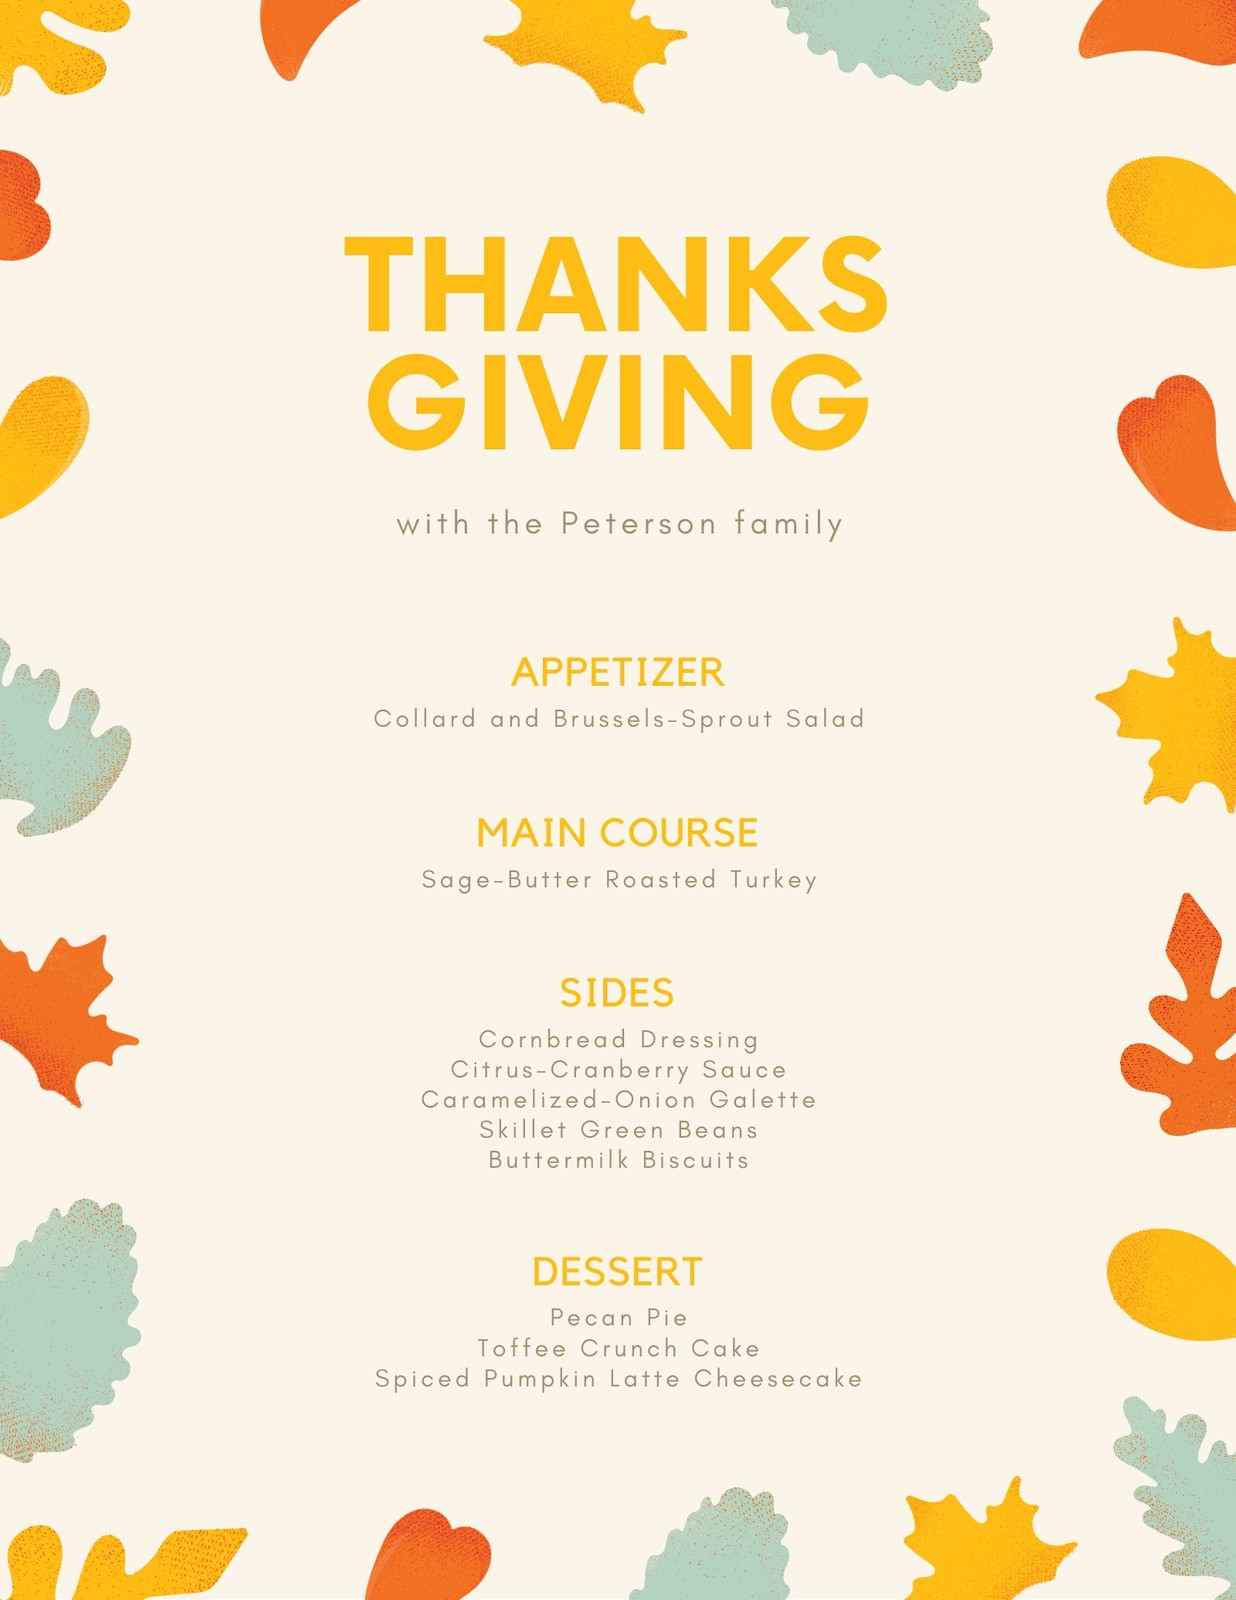 Free printable, customizable Thanksgiving menu templates | Canva